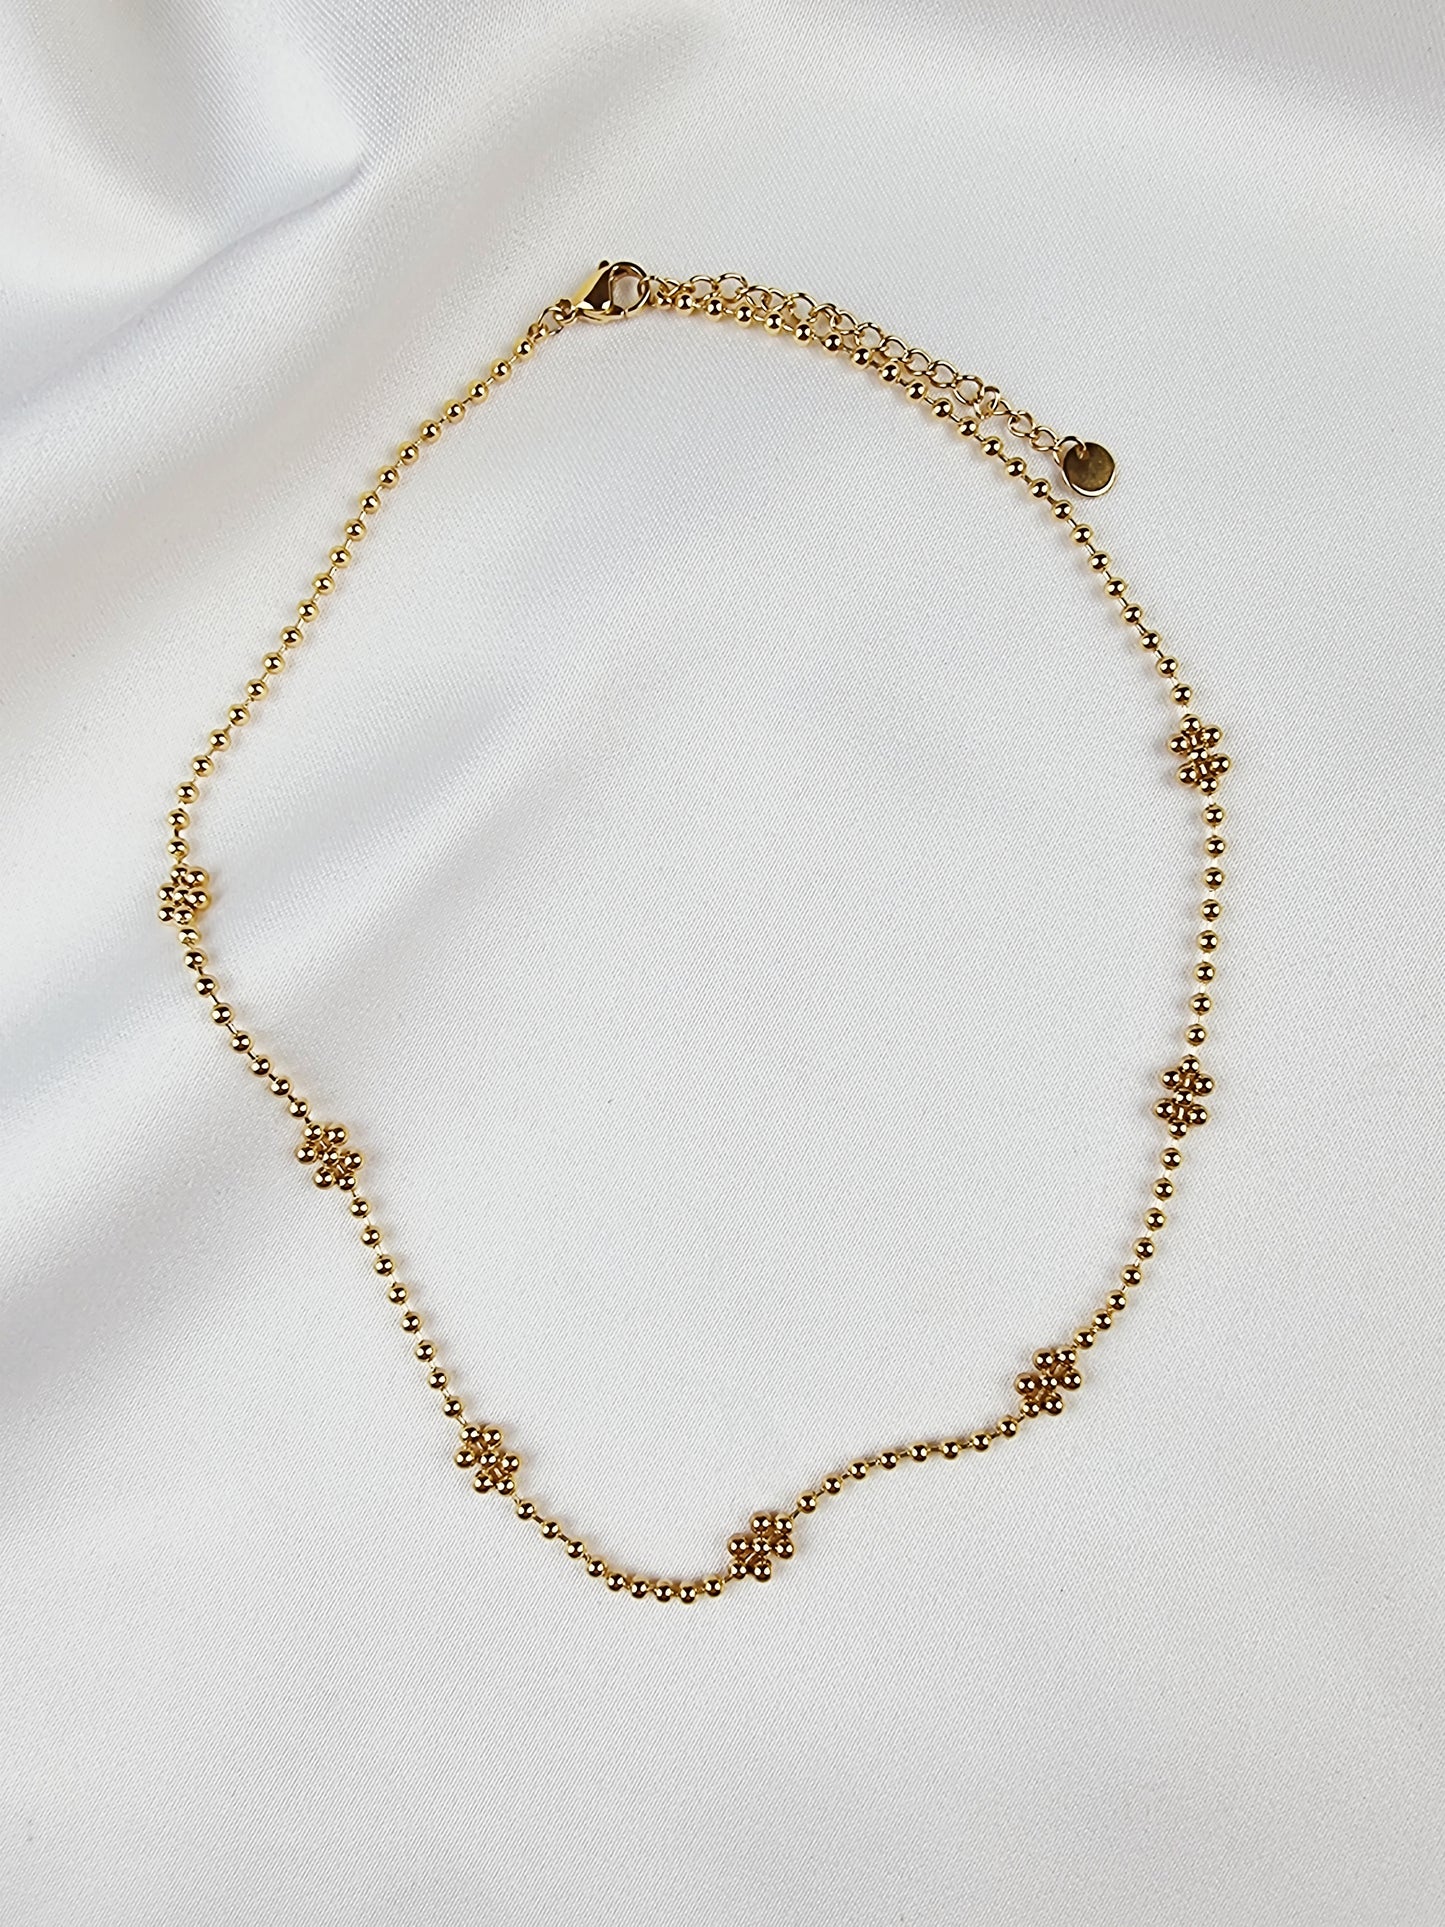 Elegant daisy necklace